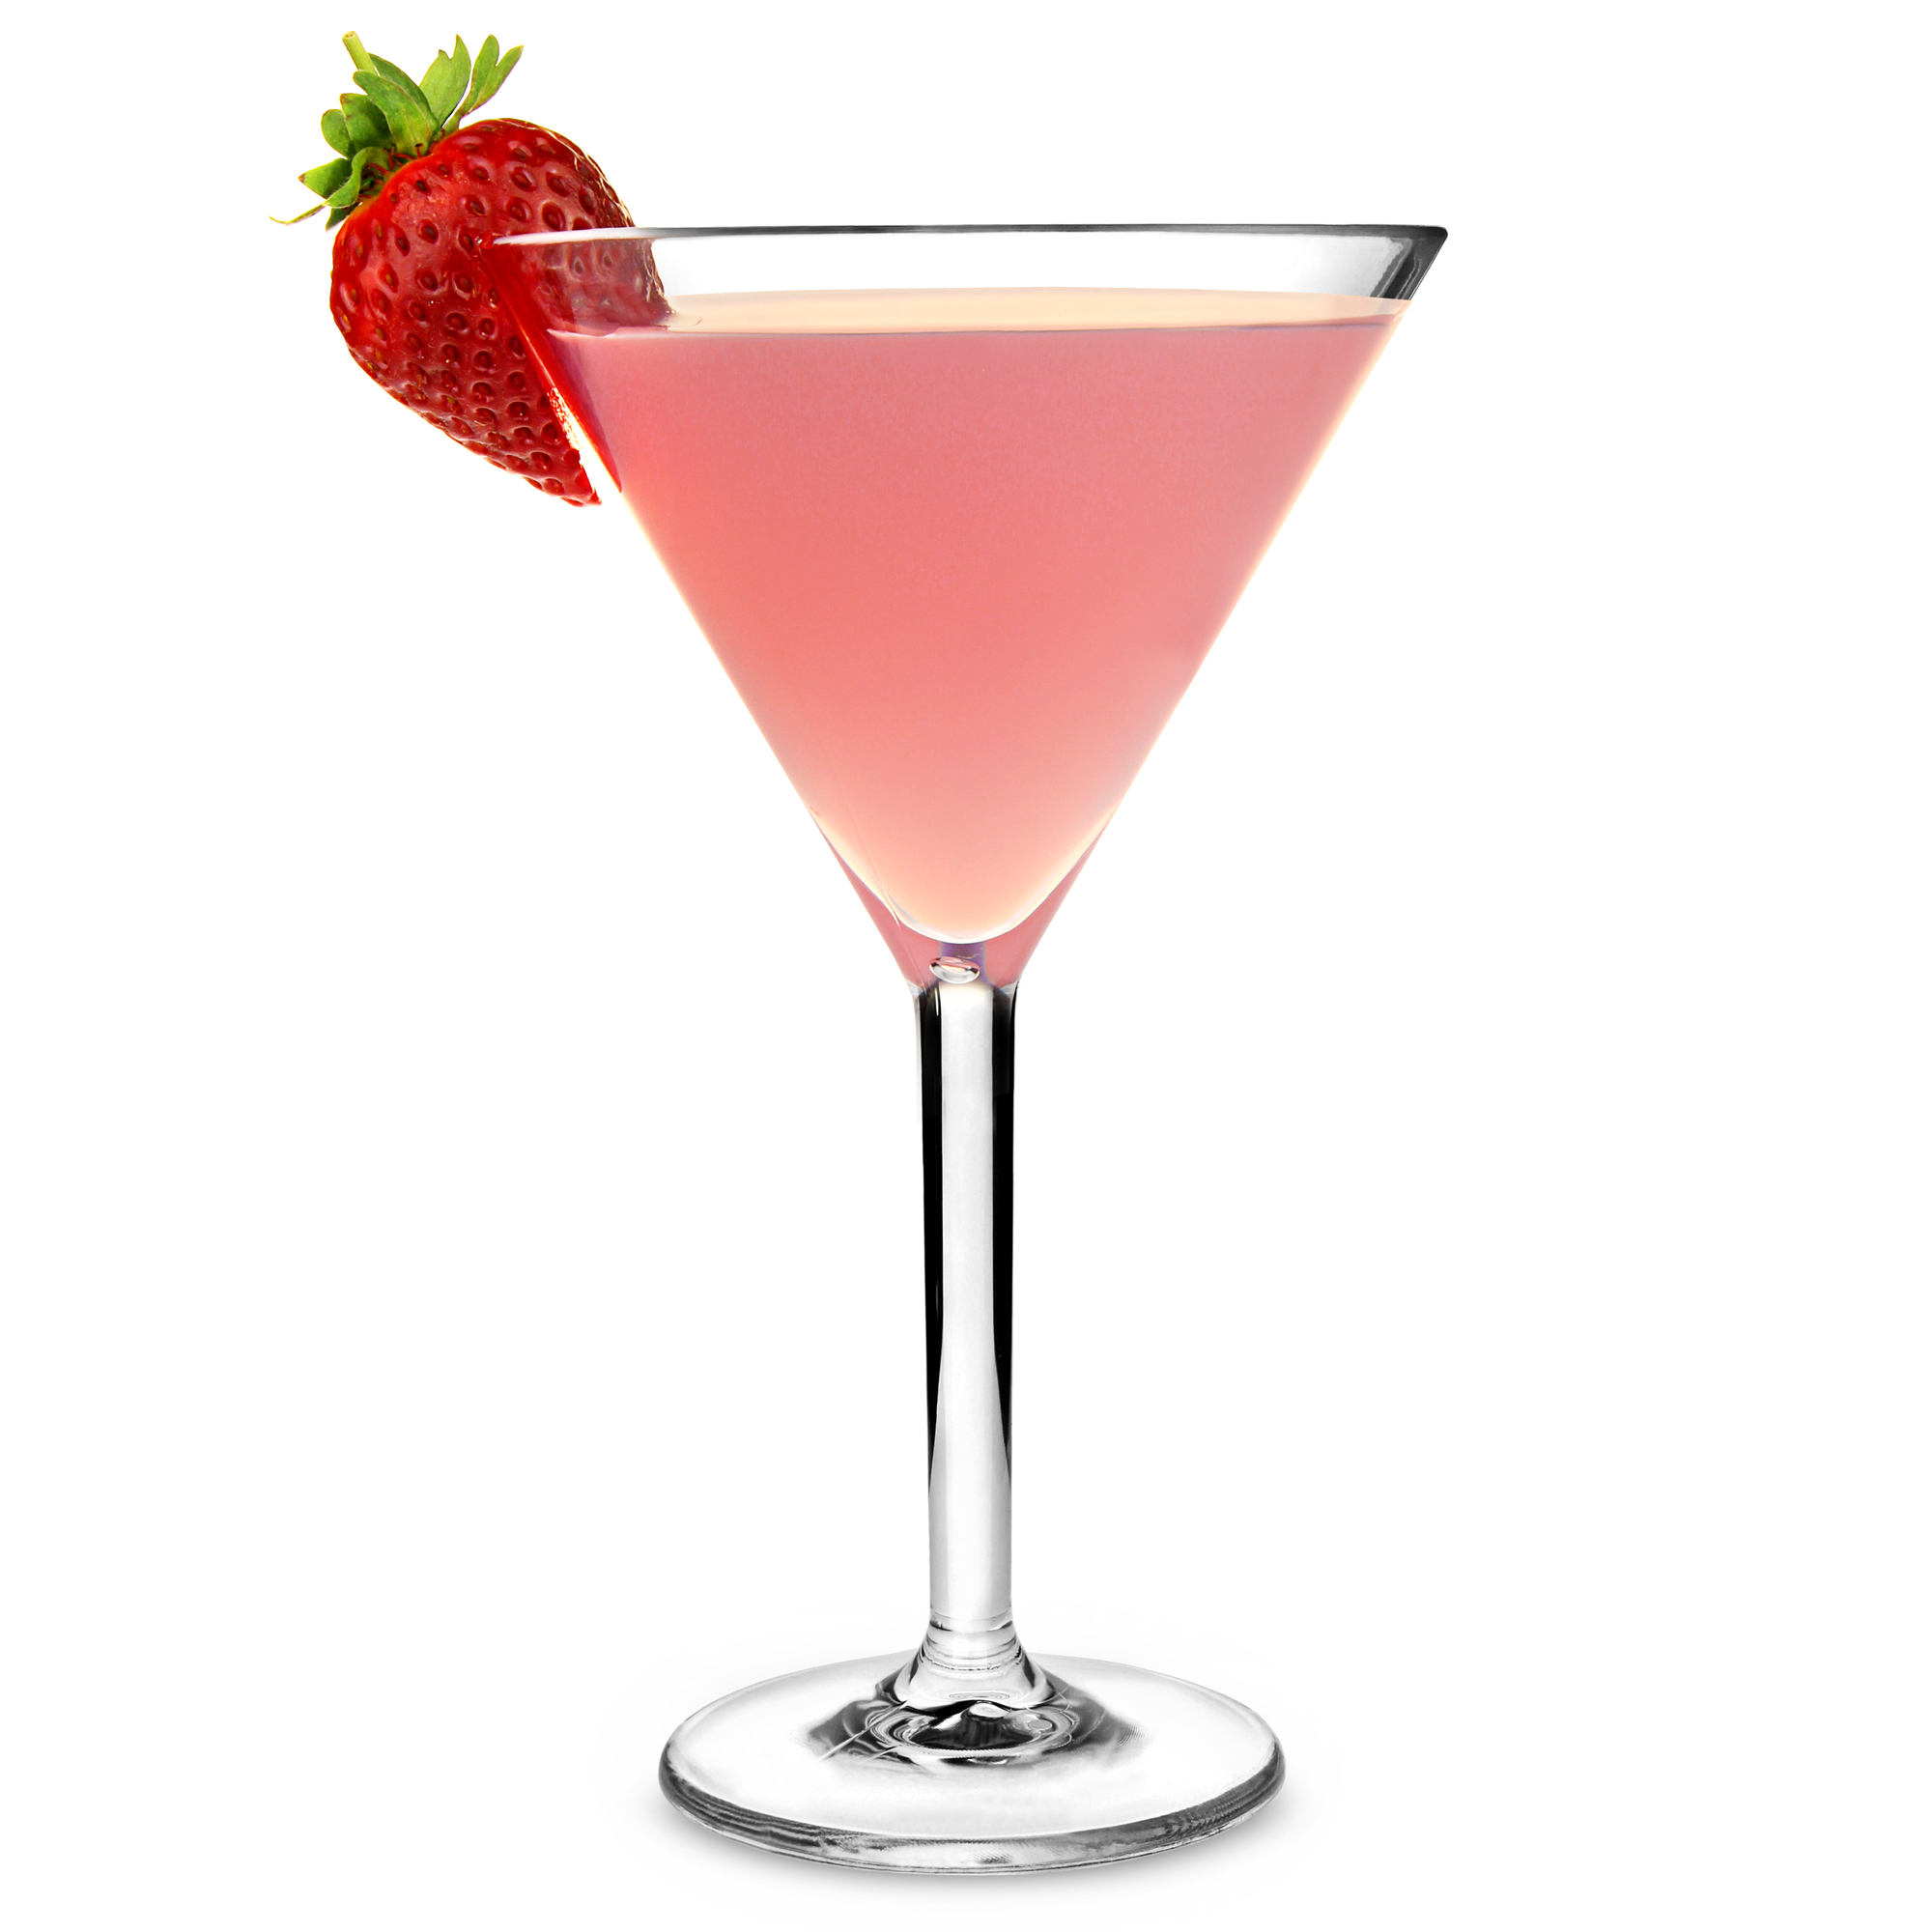 Plastic Martini Cocktail Glasses at drinkstuff.com